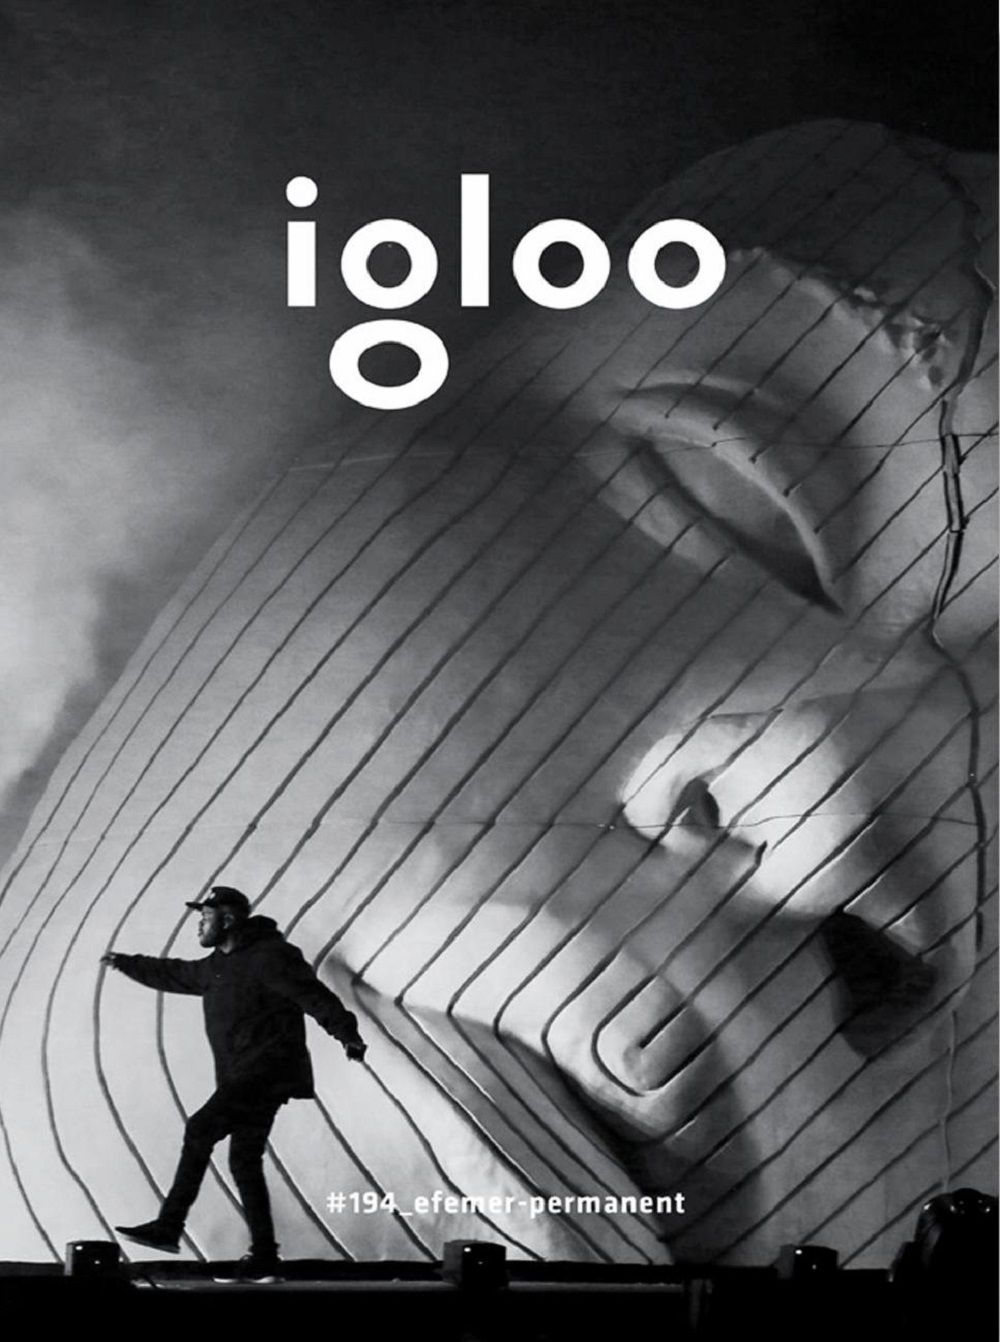 Igloo - Habitat si arhitectura - Februarie, martie 2020